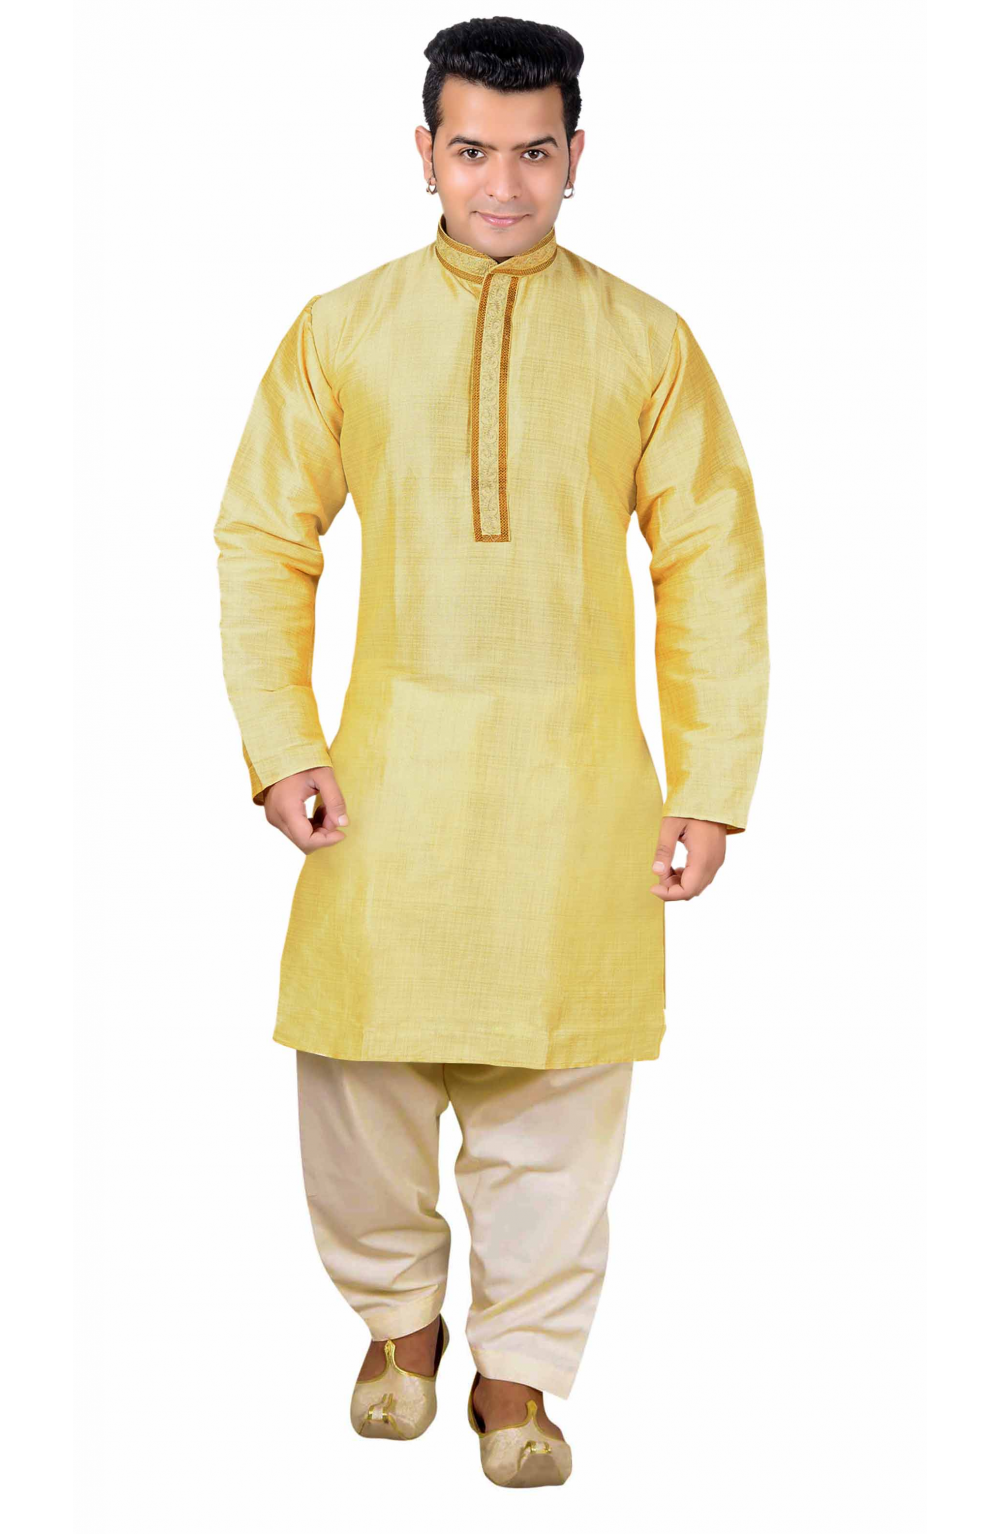 Men's Indian Sherwani Kurta Salwar Kameez Pajama Bollywood Style Costume 824 